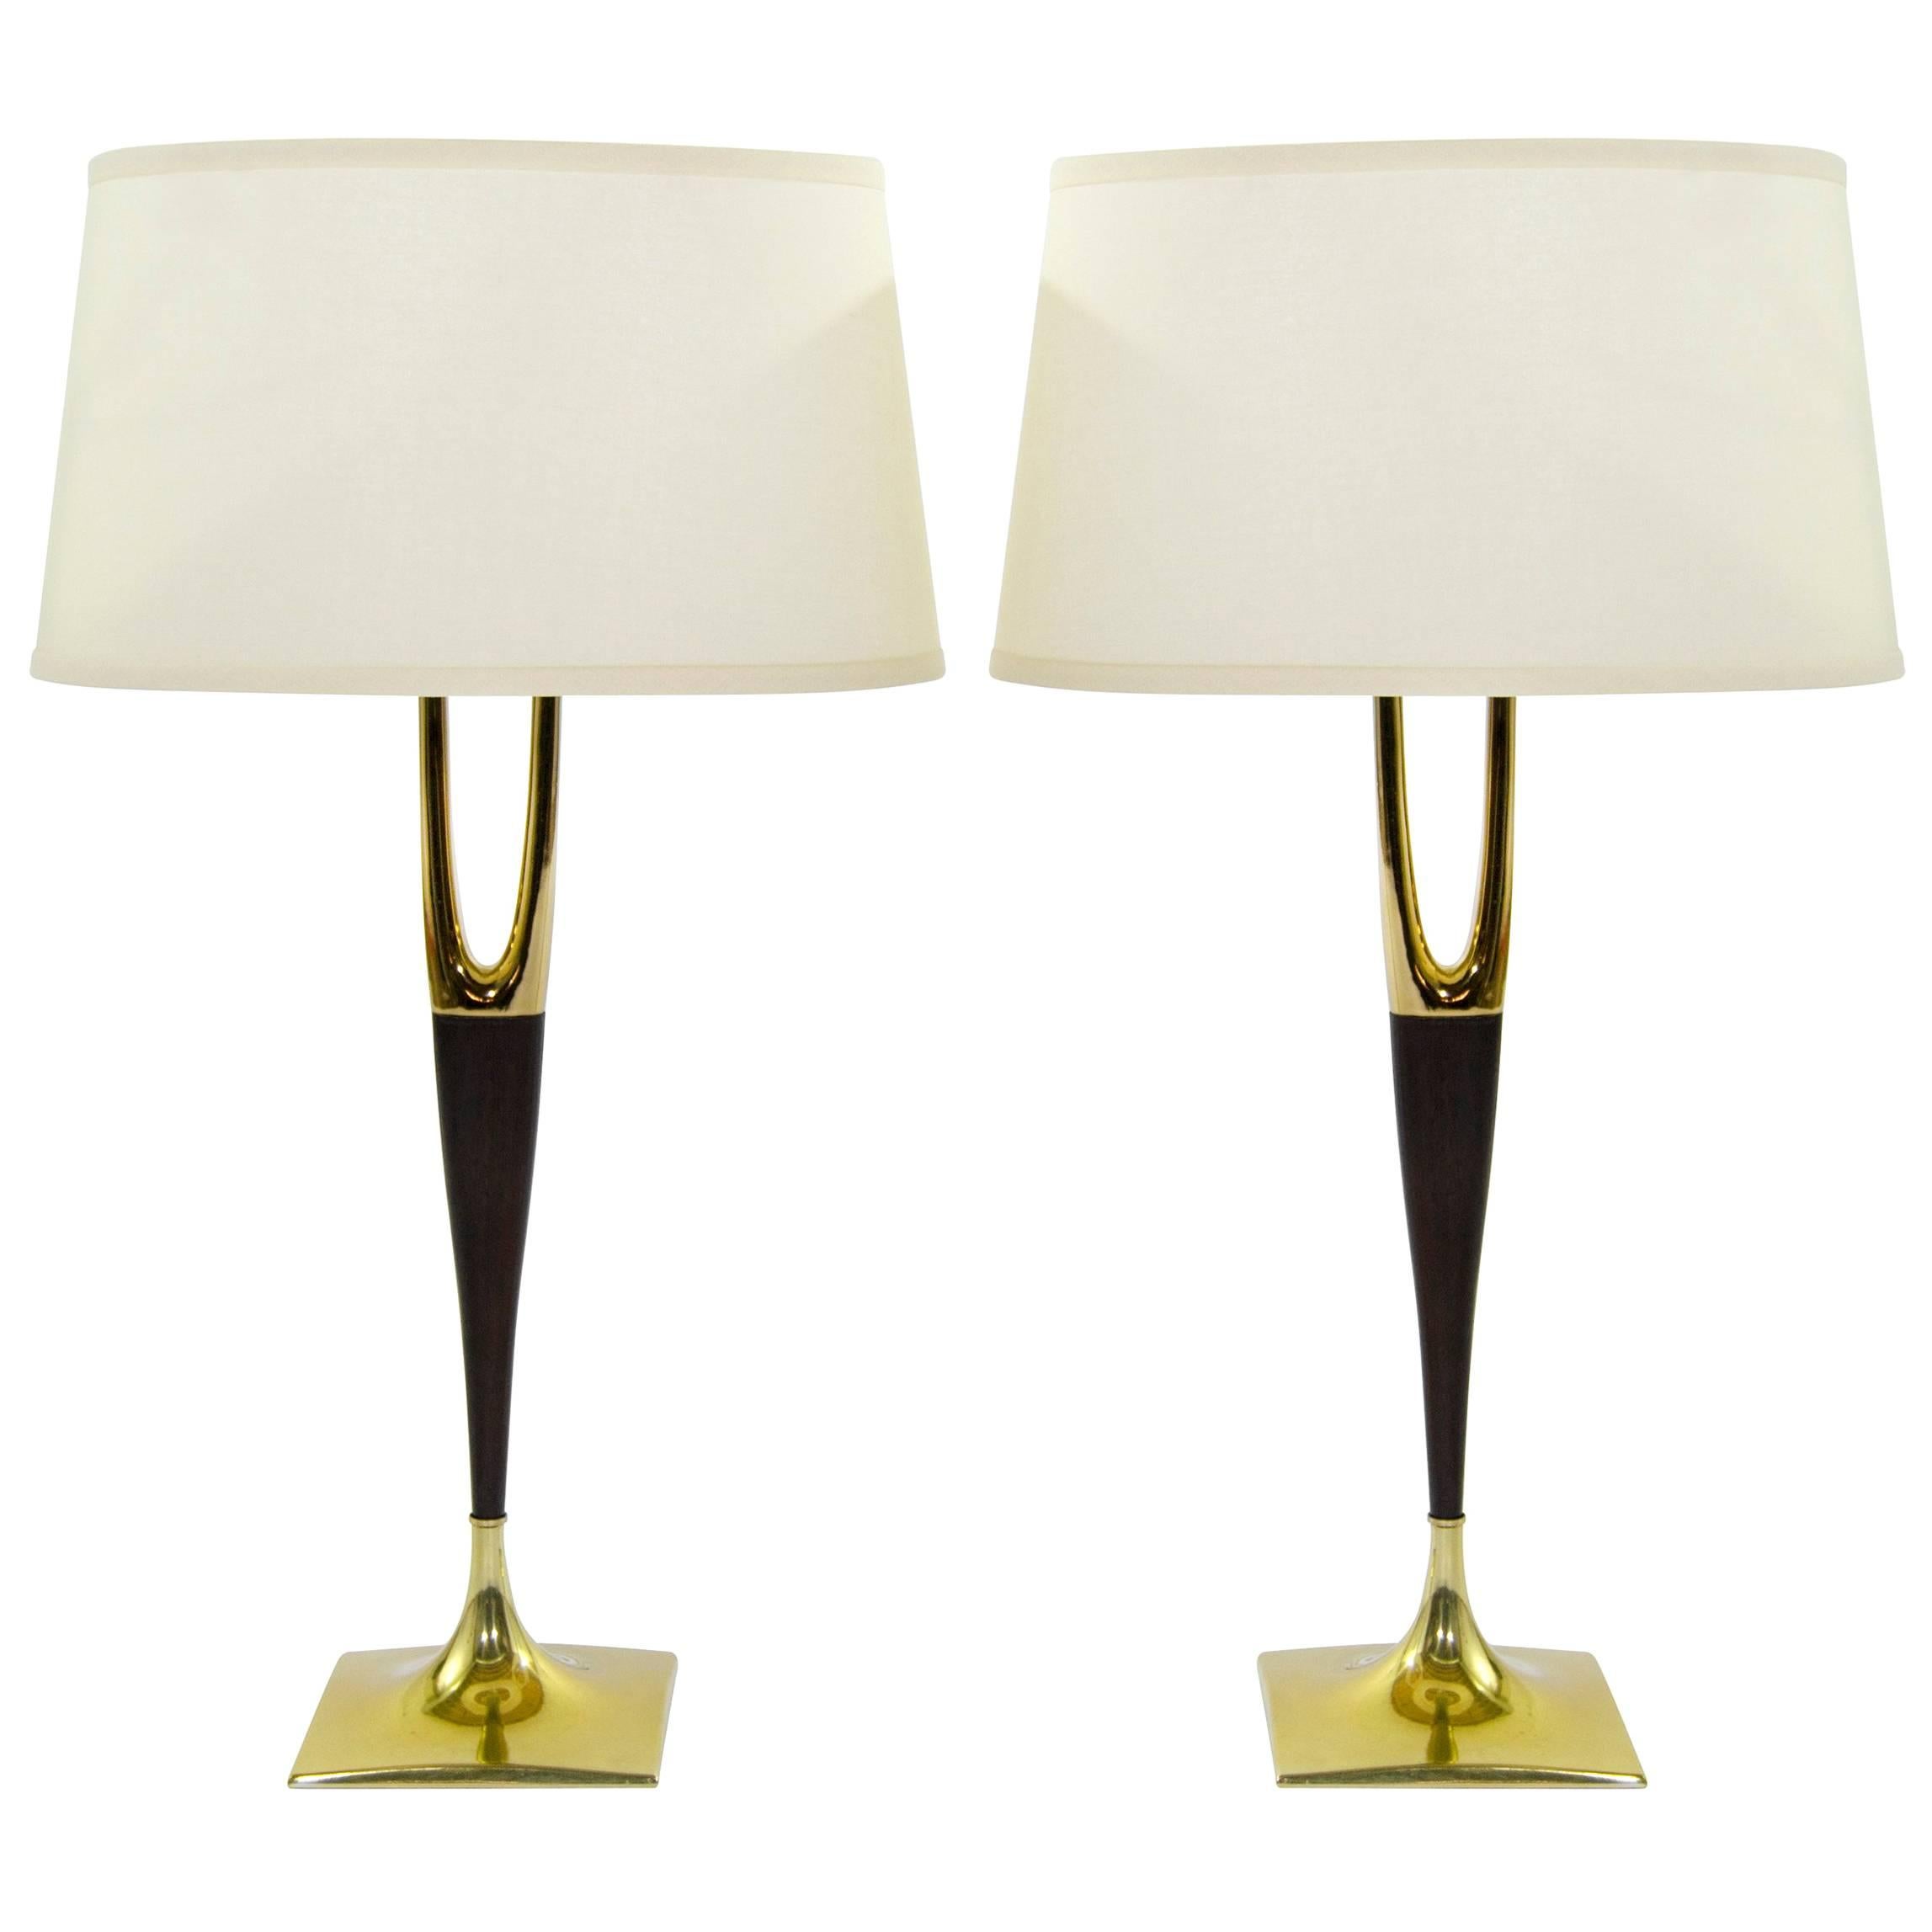 Laurel Lamp Company Wishbone Table Lamps